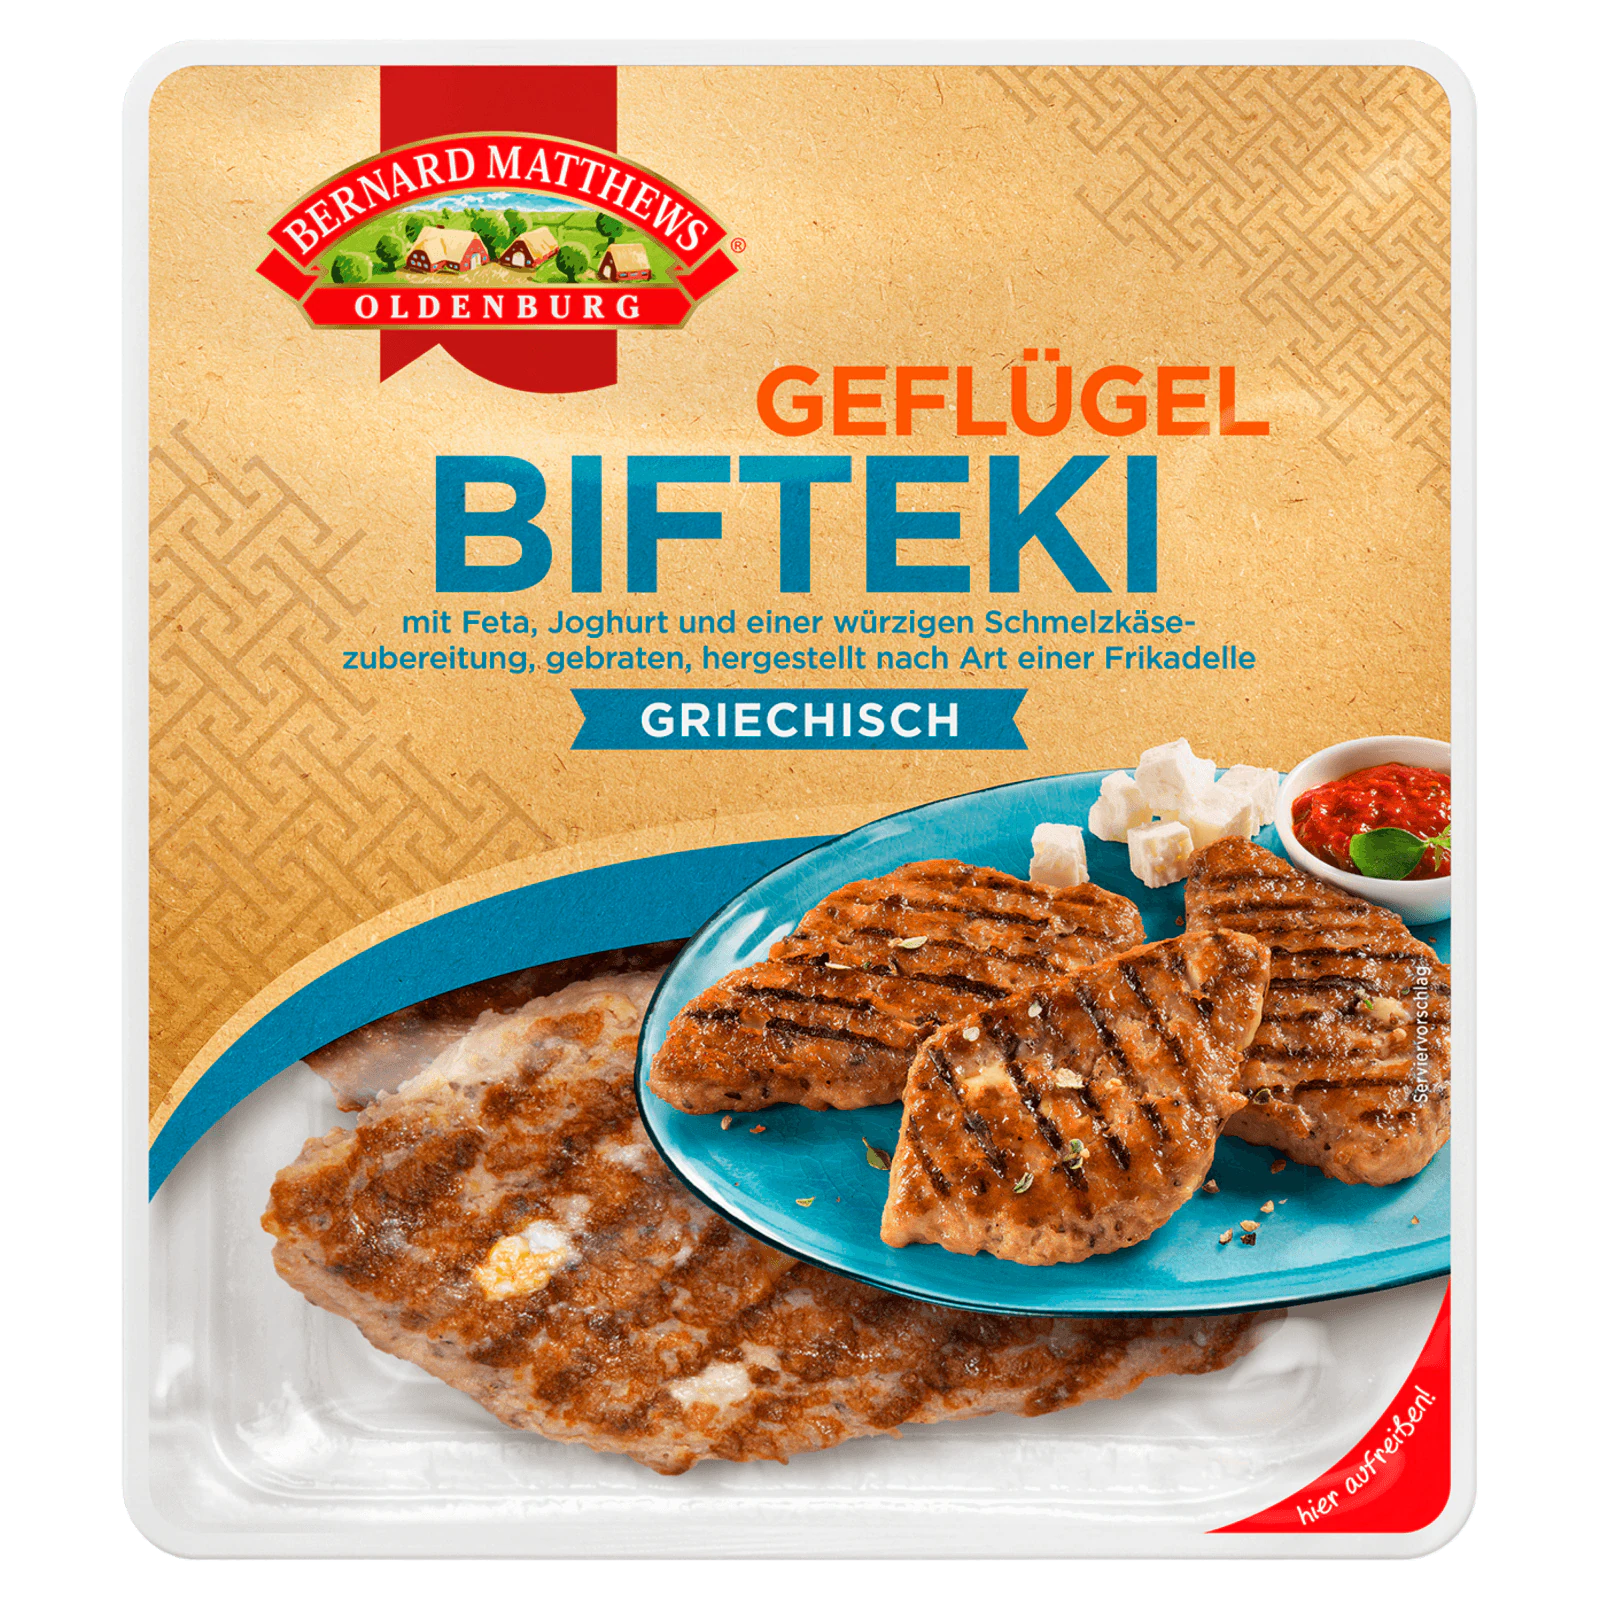 Bernard Matthews Oldenburg Geflügel-Bifteki 200g  für 2.99 EUR